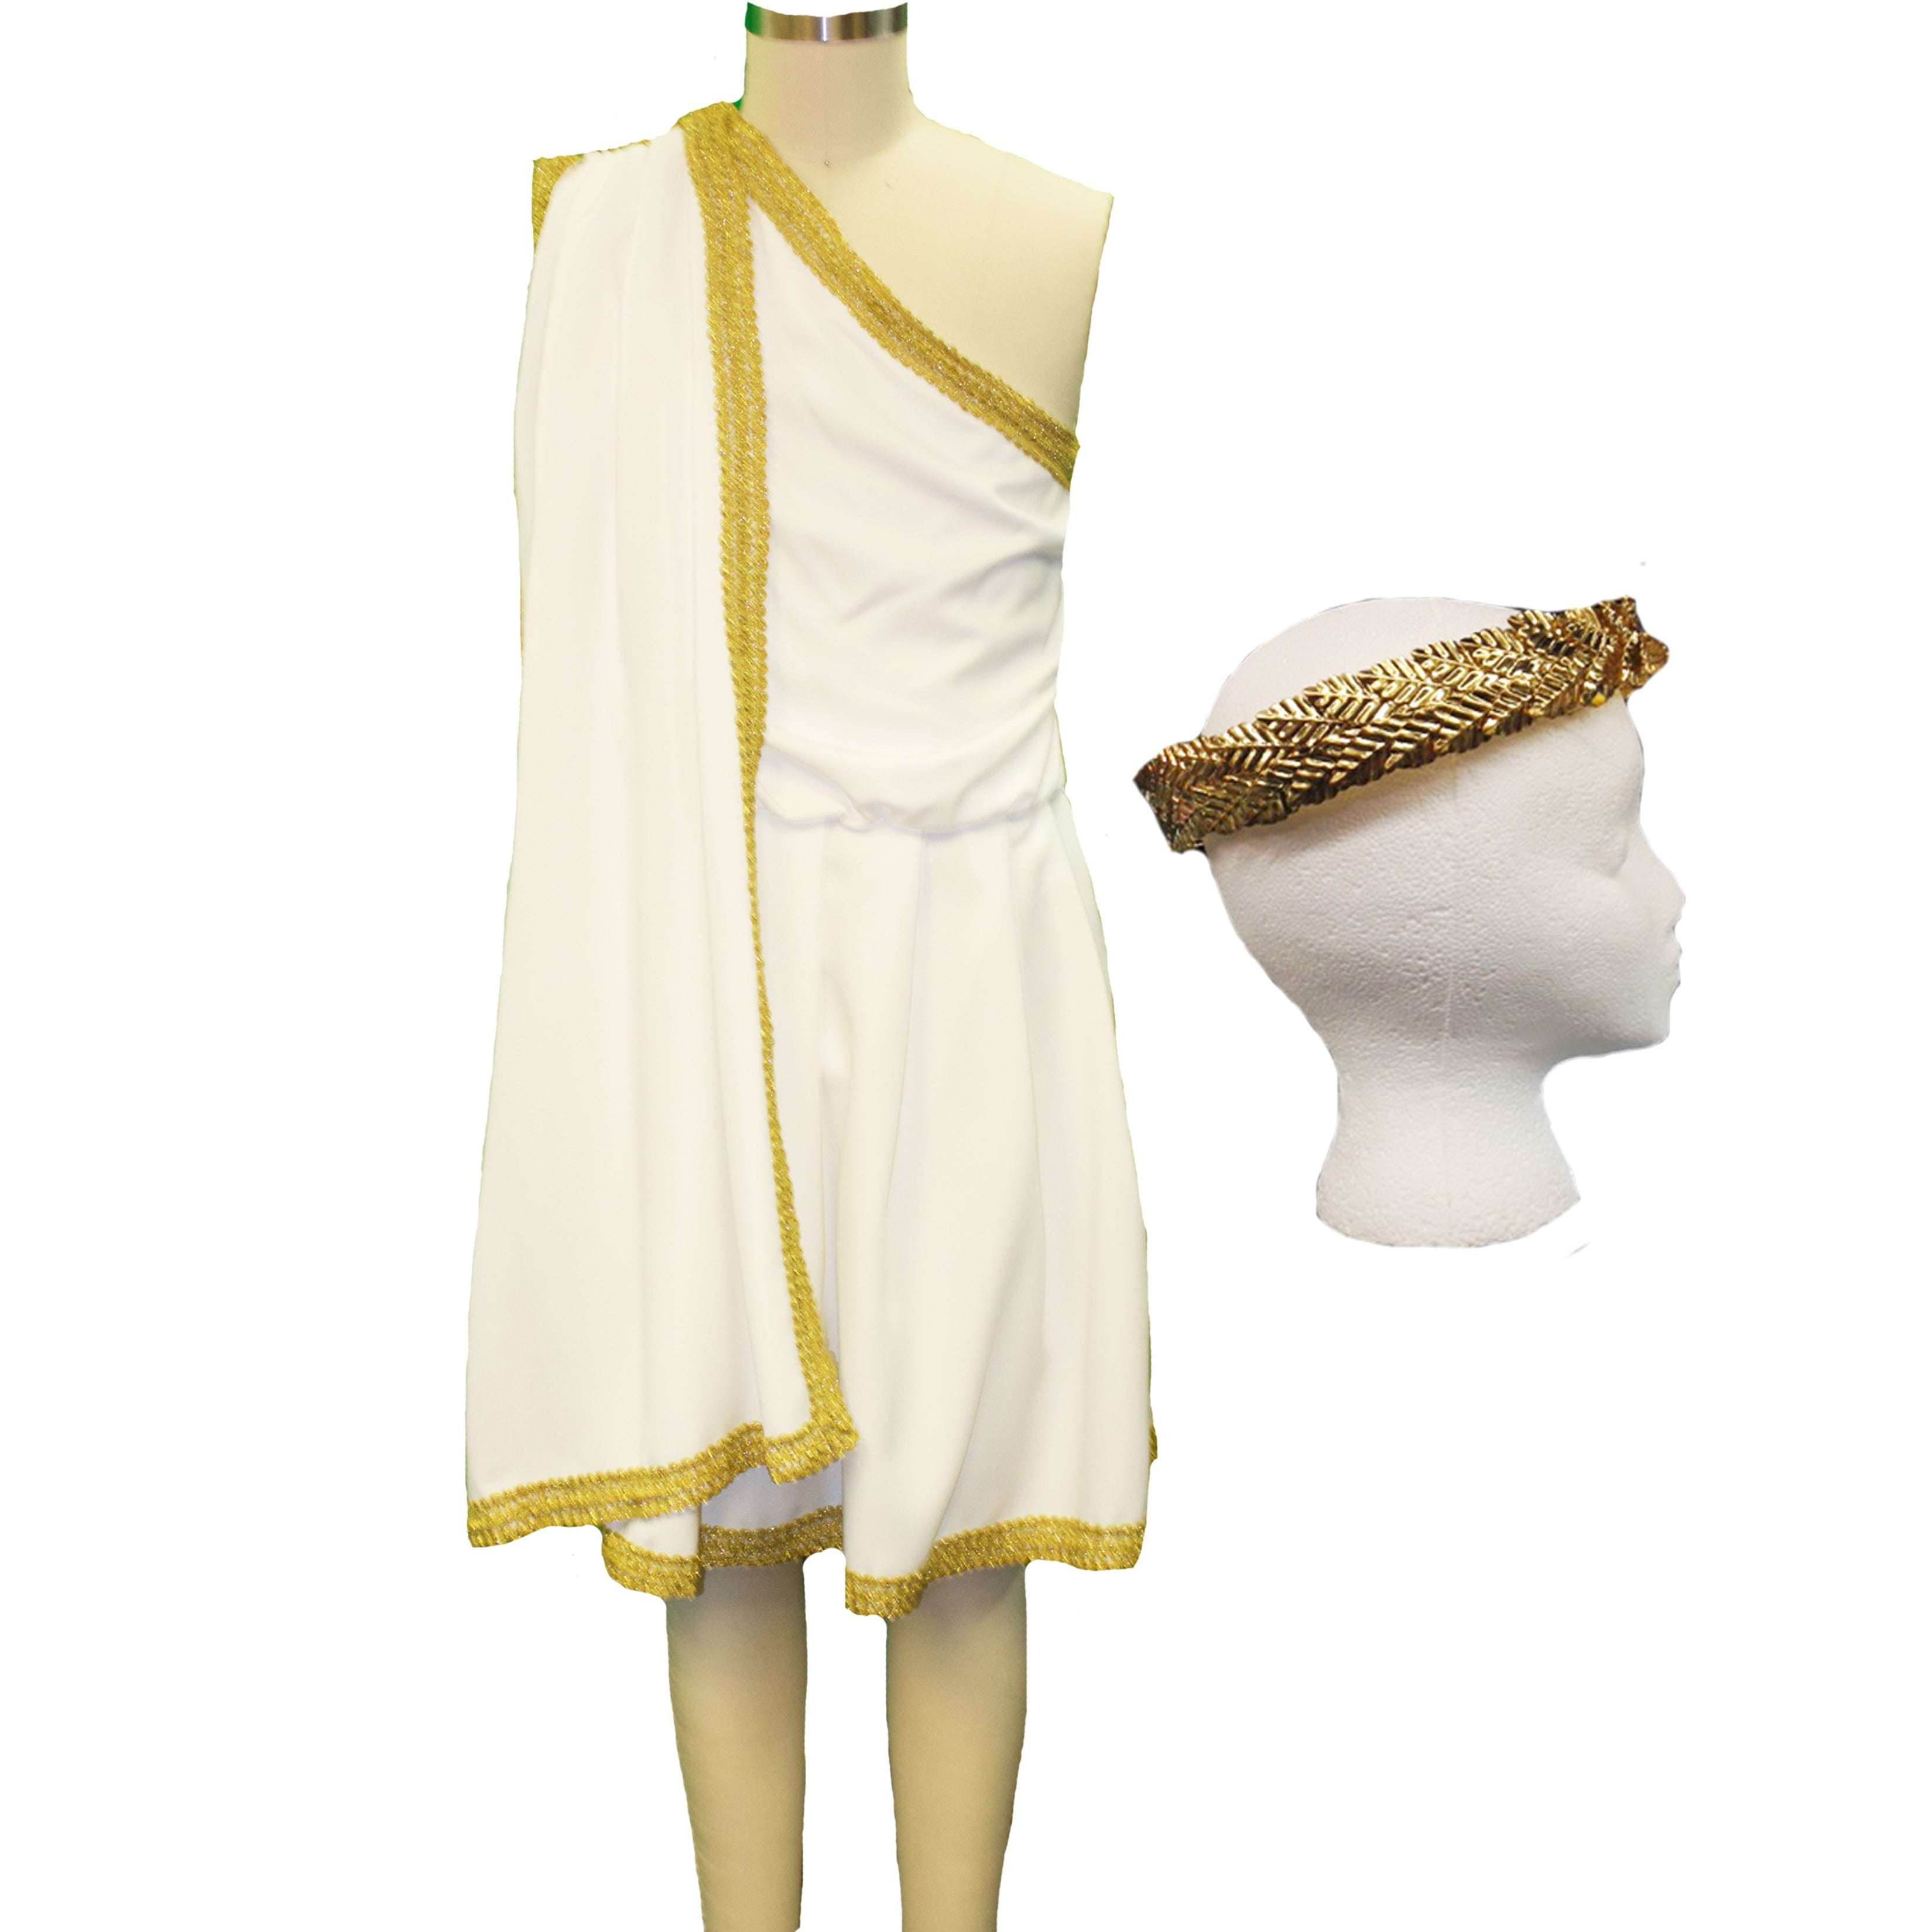 Roman Men's Short Toga Adult Costume